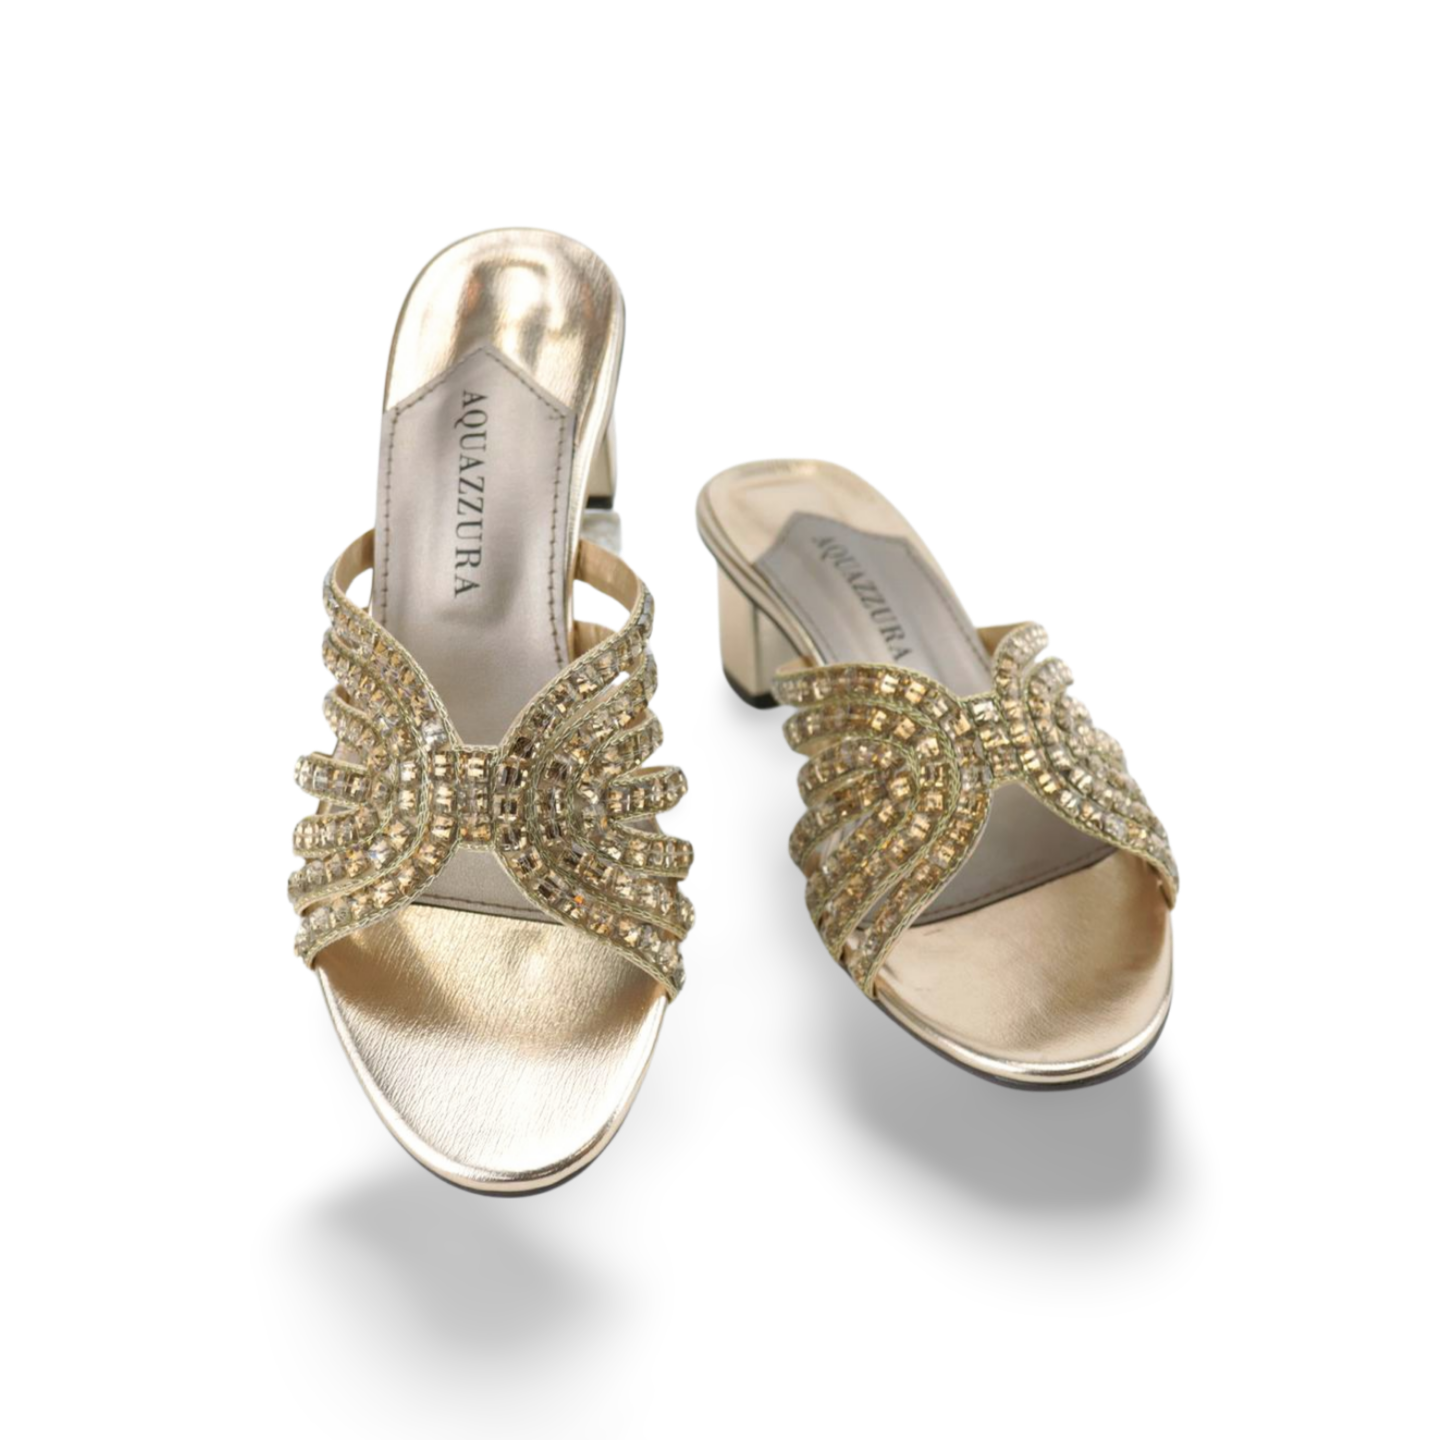 Women's Block Heel Sandal with Crystal Embellishments